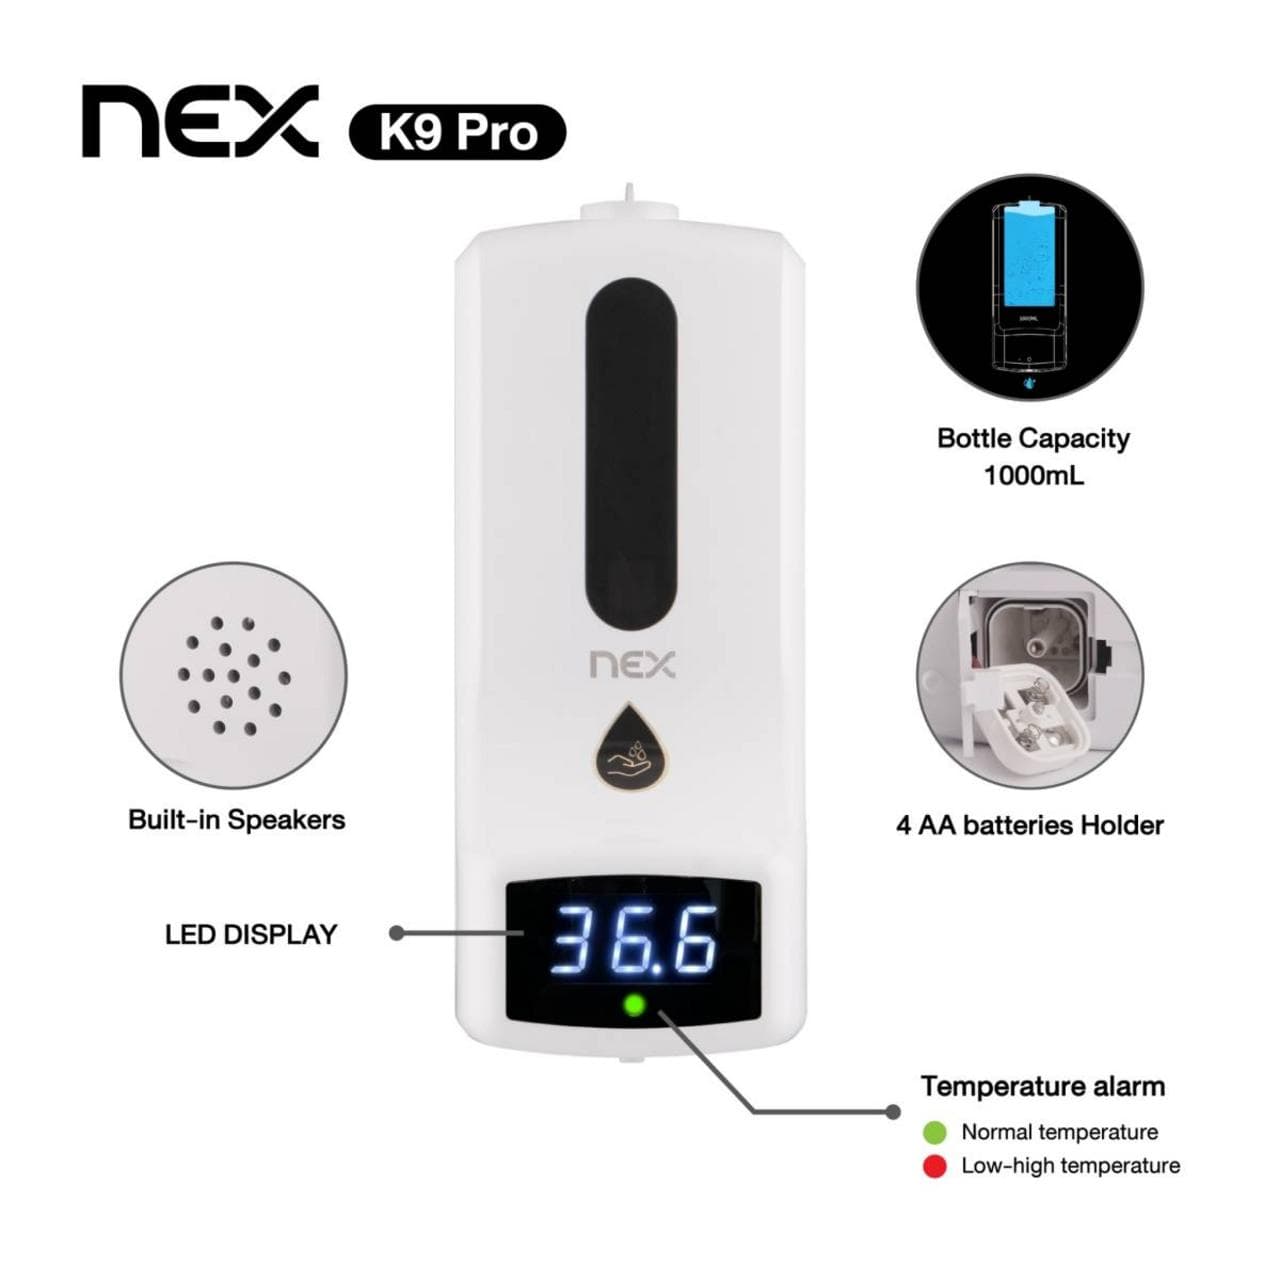 2-1 Alcohol Dispenser & Med. Thermometer K9 Pro